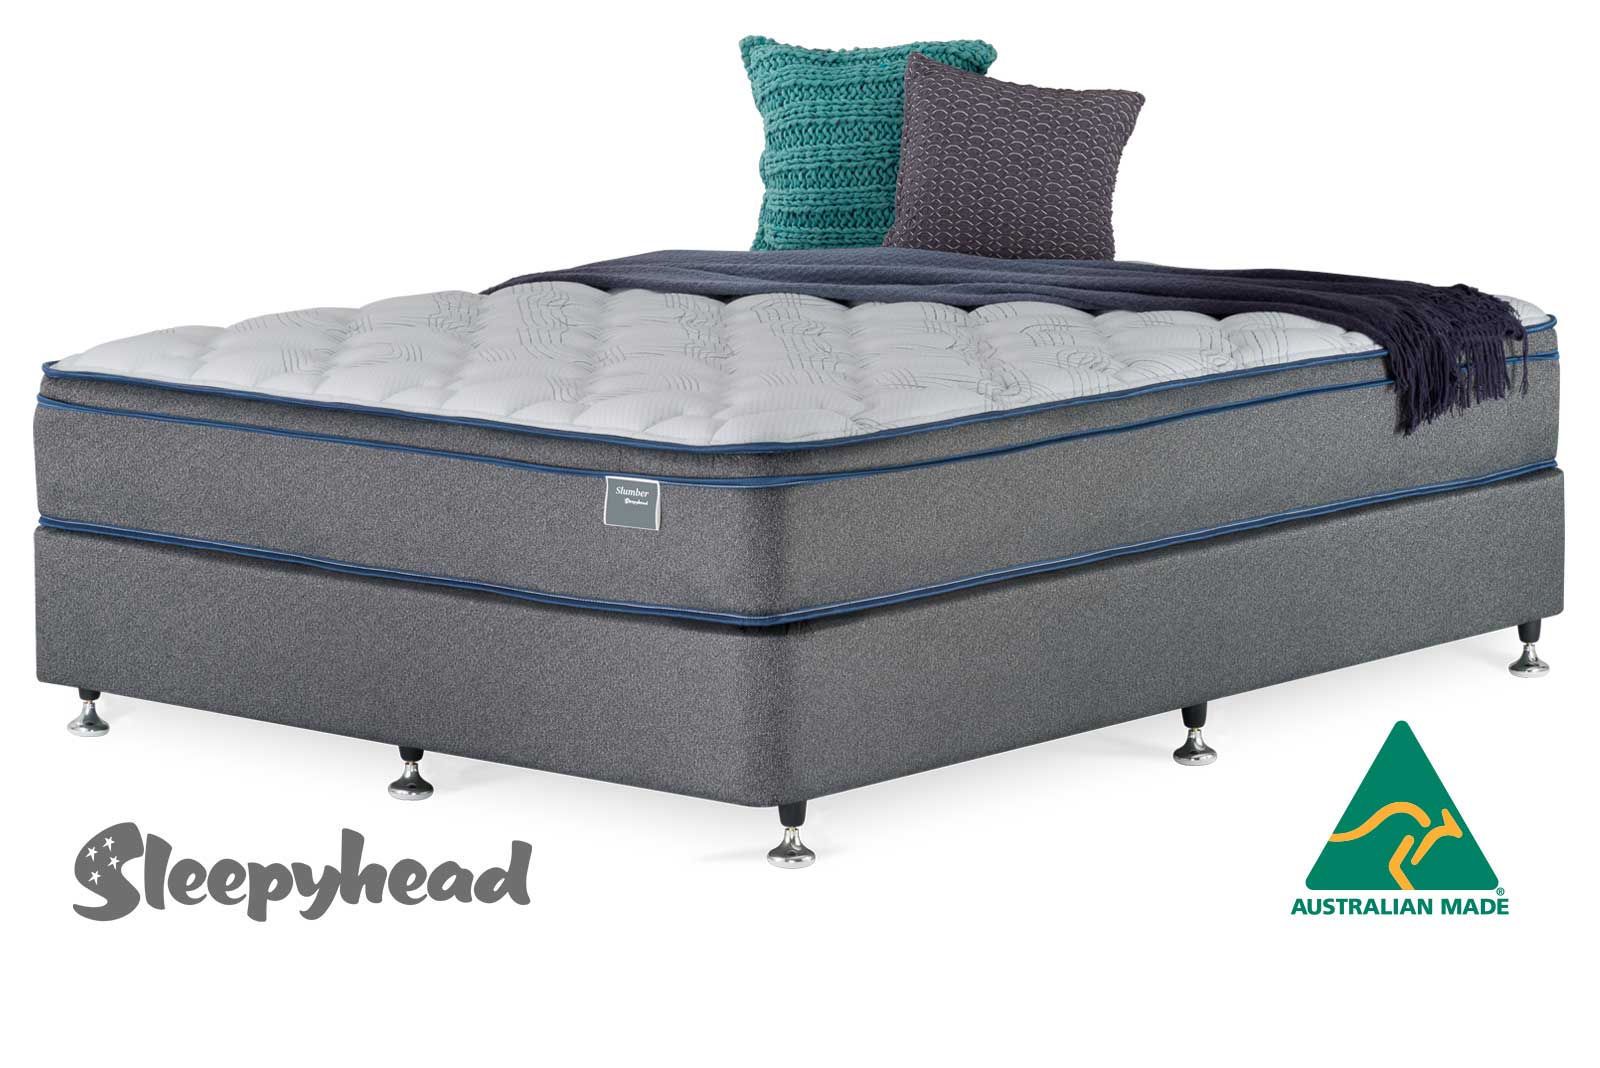 sleepyhead slumber mattress review